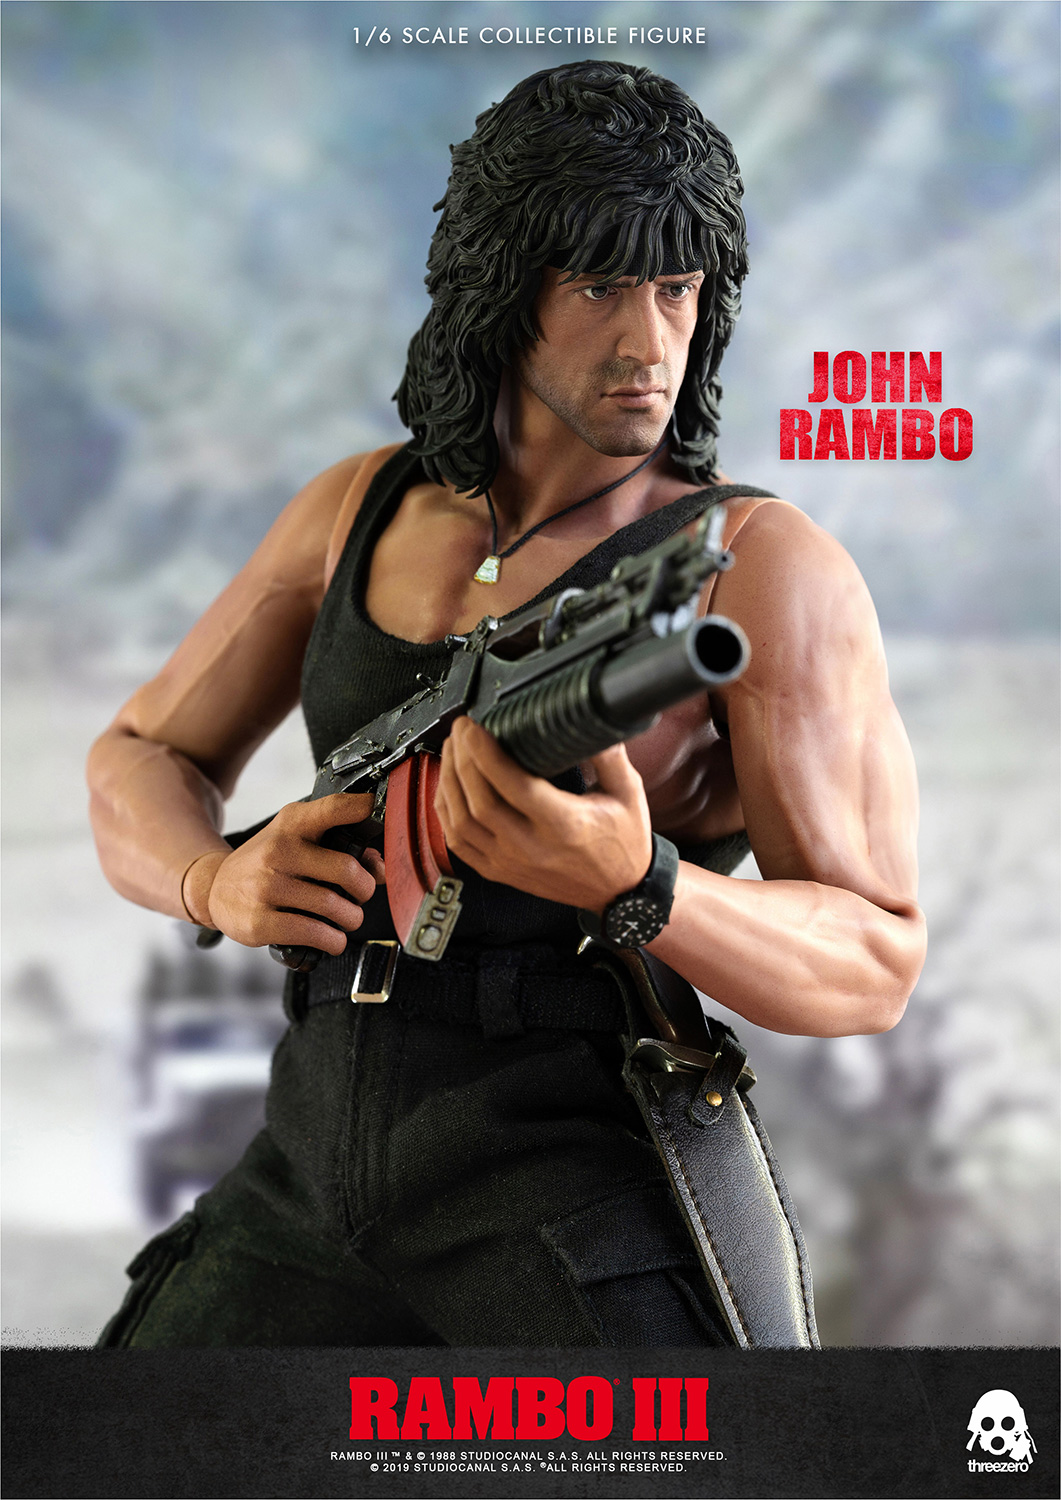 Figurine articulée Threezero Rambo I figurine 1/6 John Rambo 30 cm